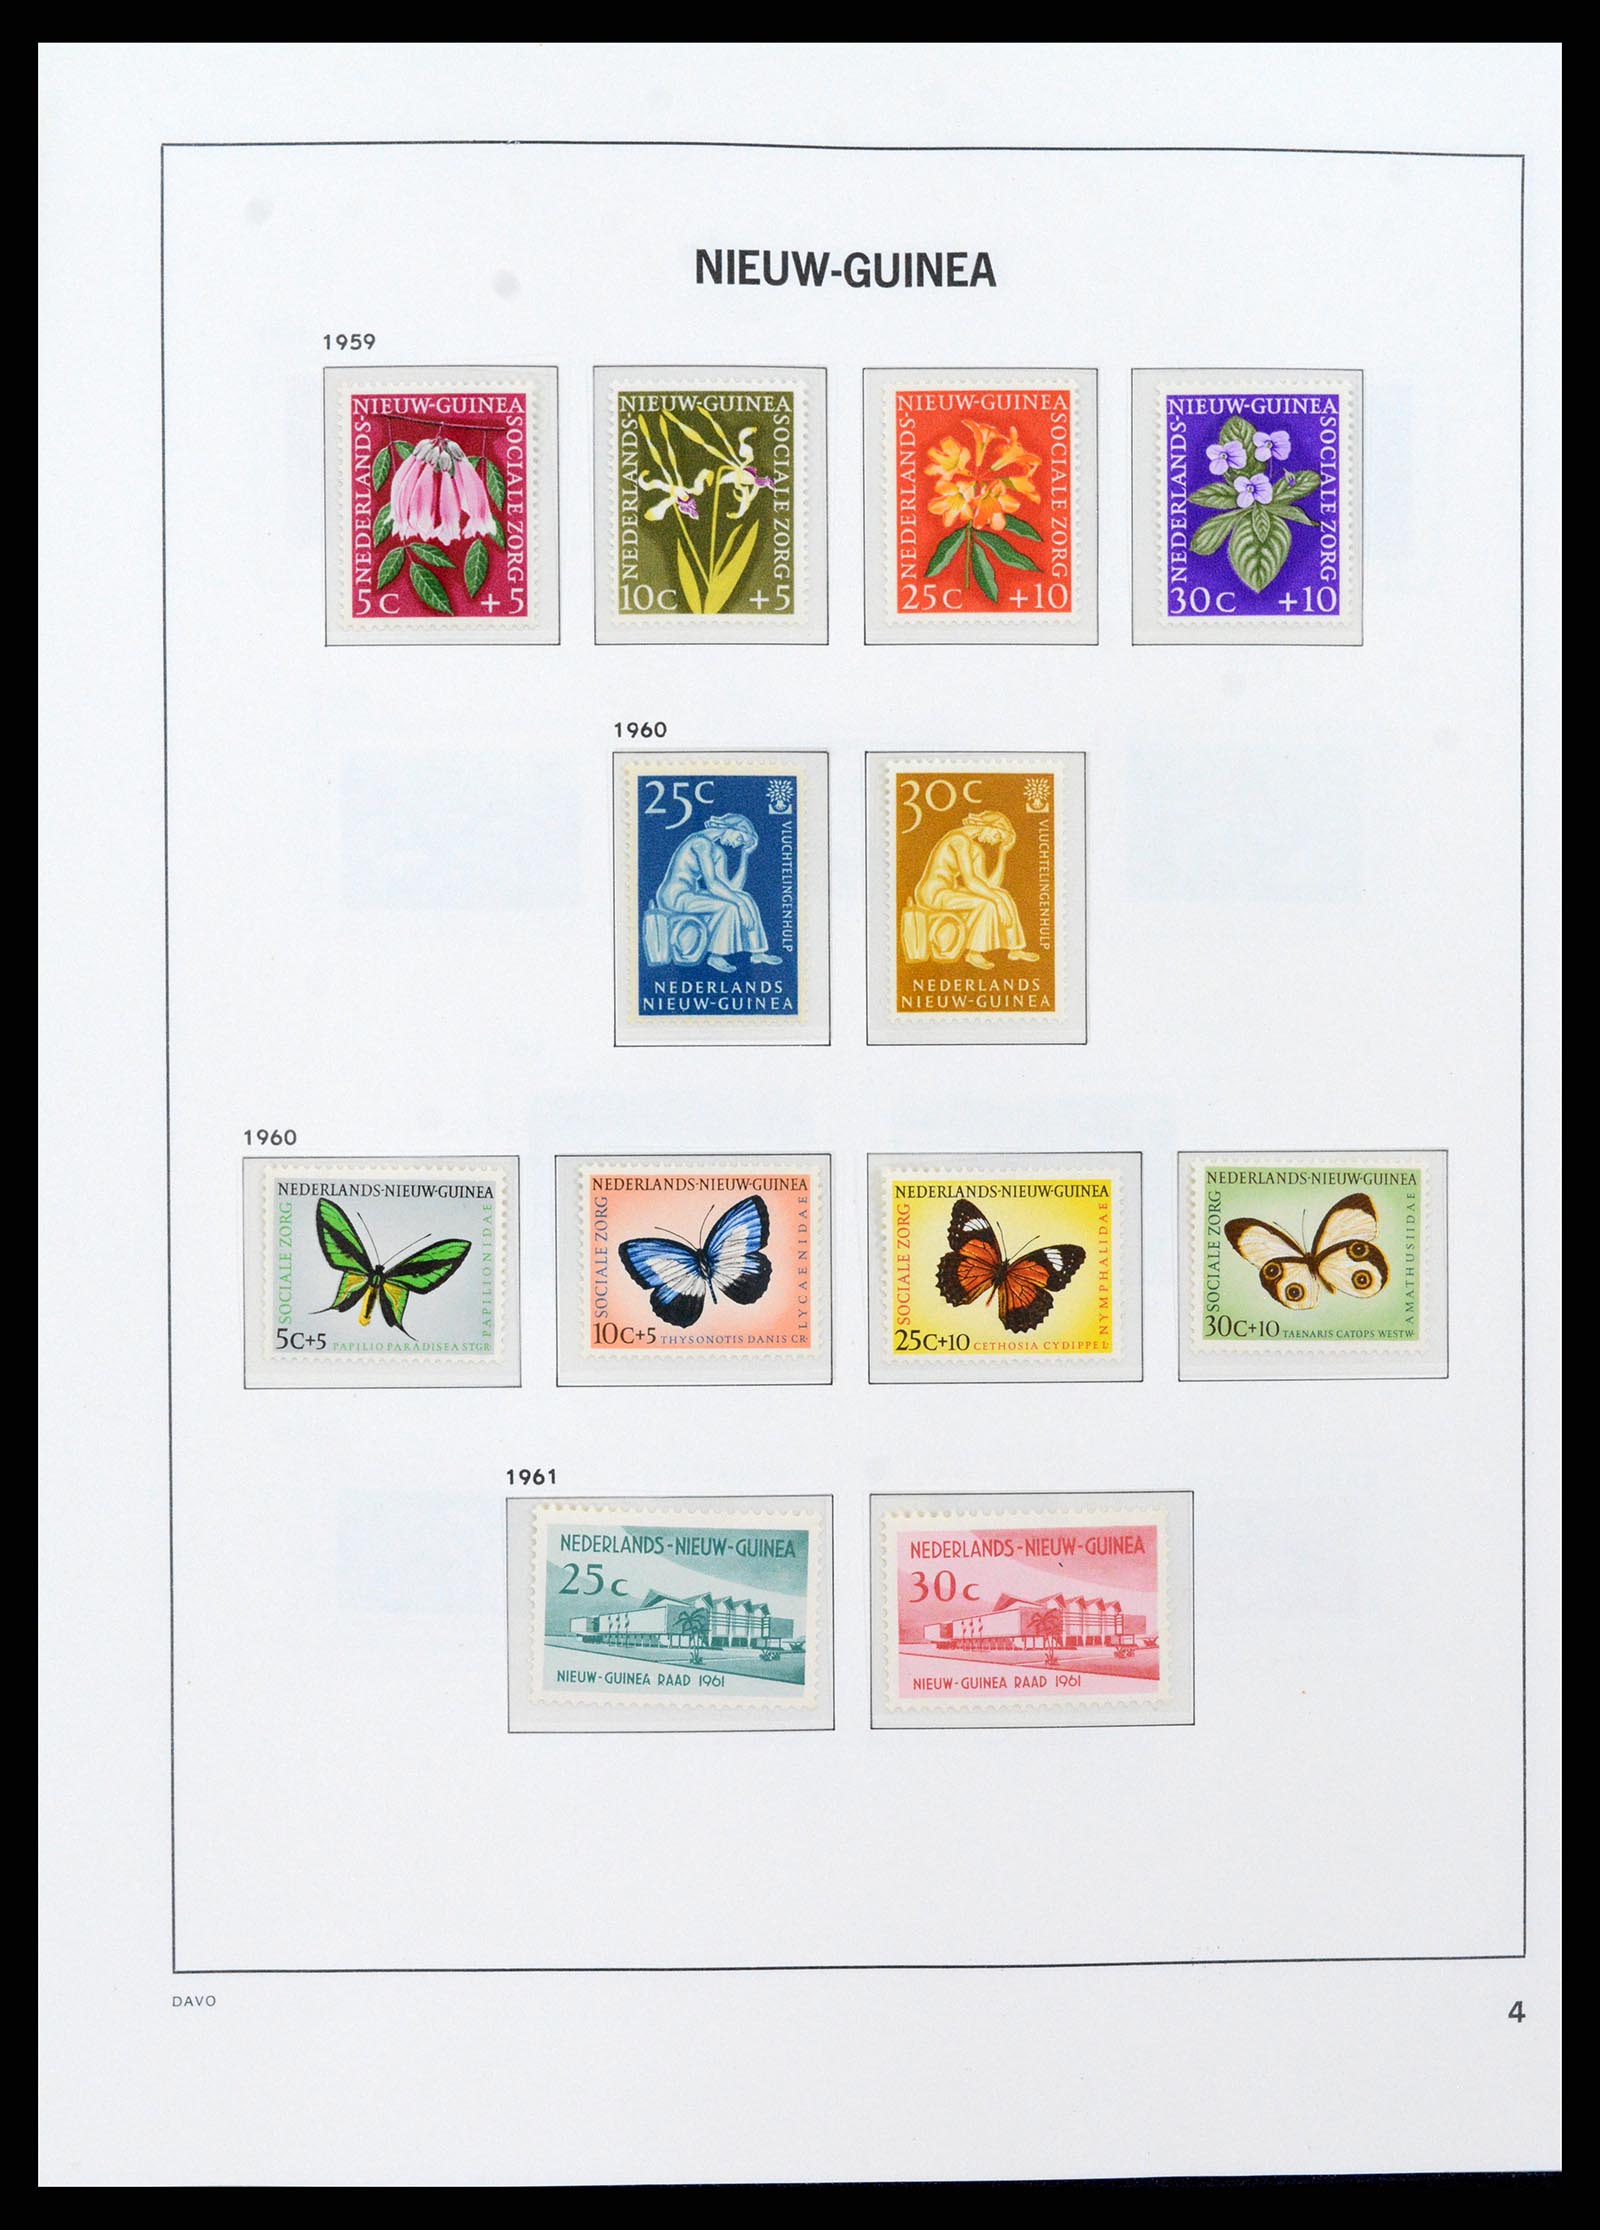 37430 037 - Stamp collection 37430 Dutch Indies 1864-1962.